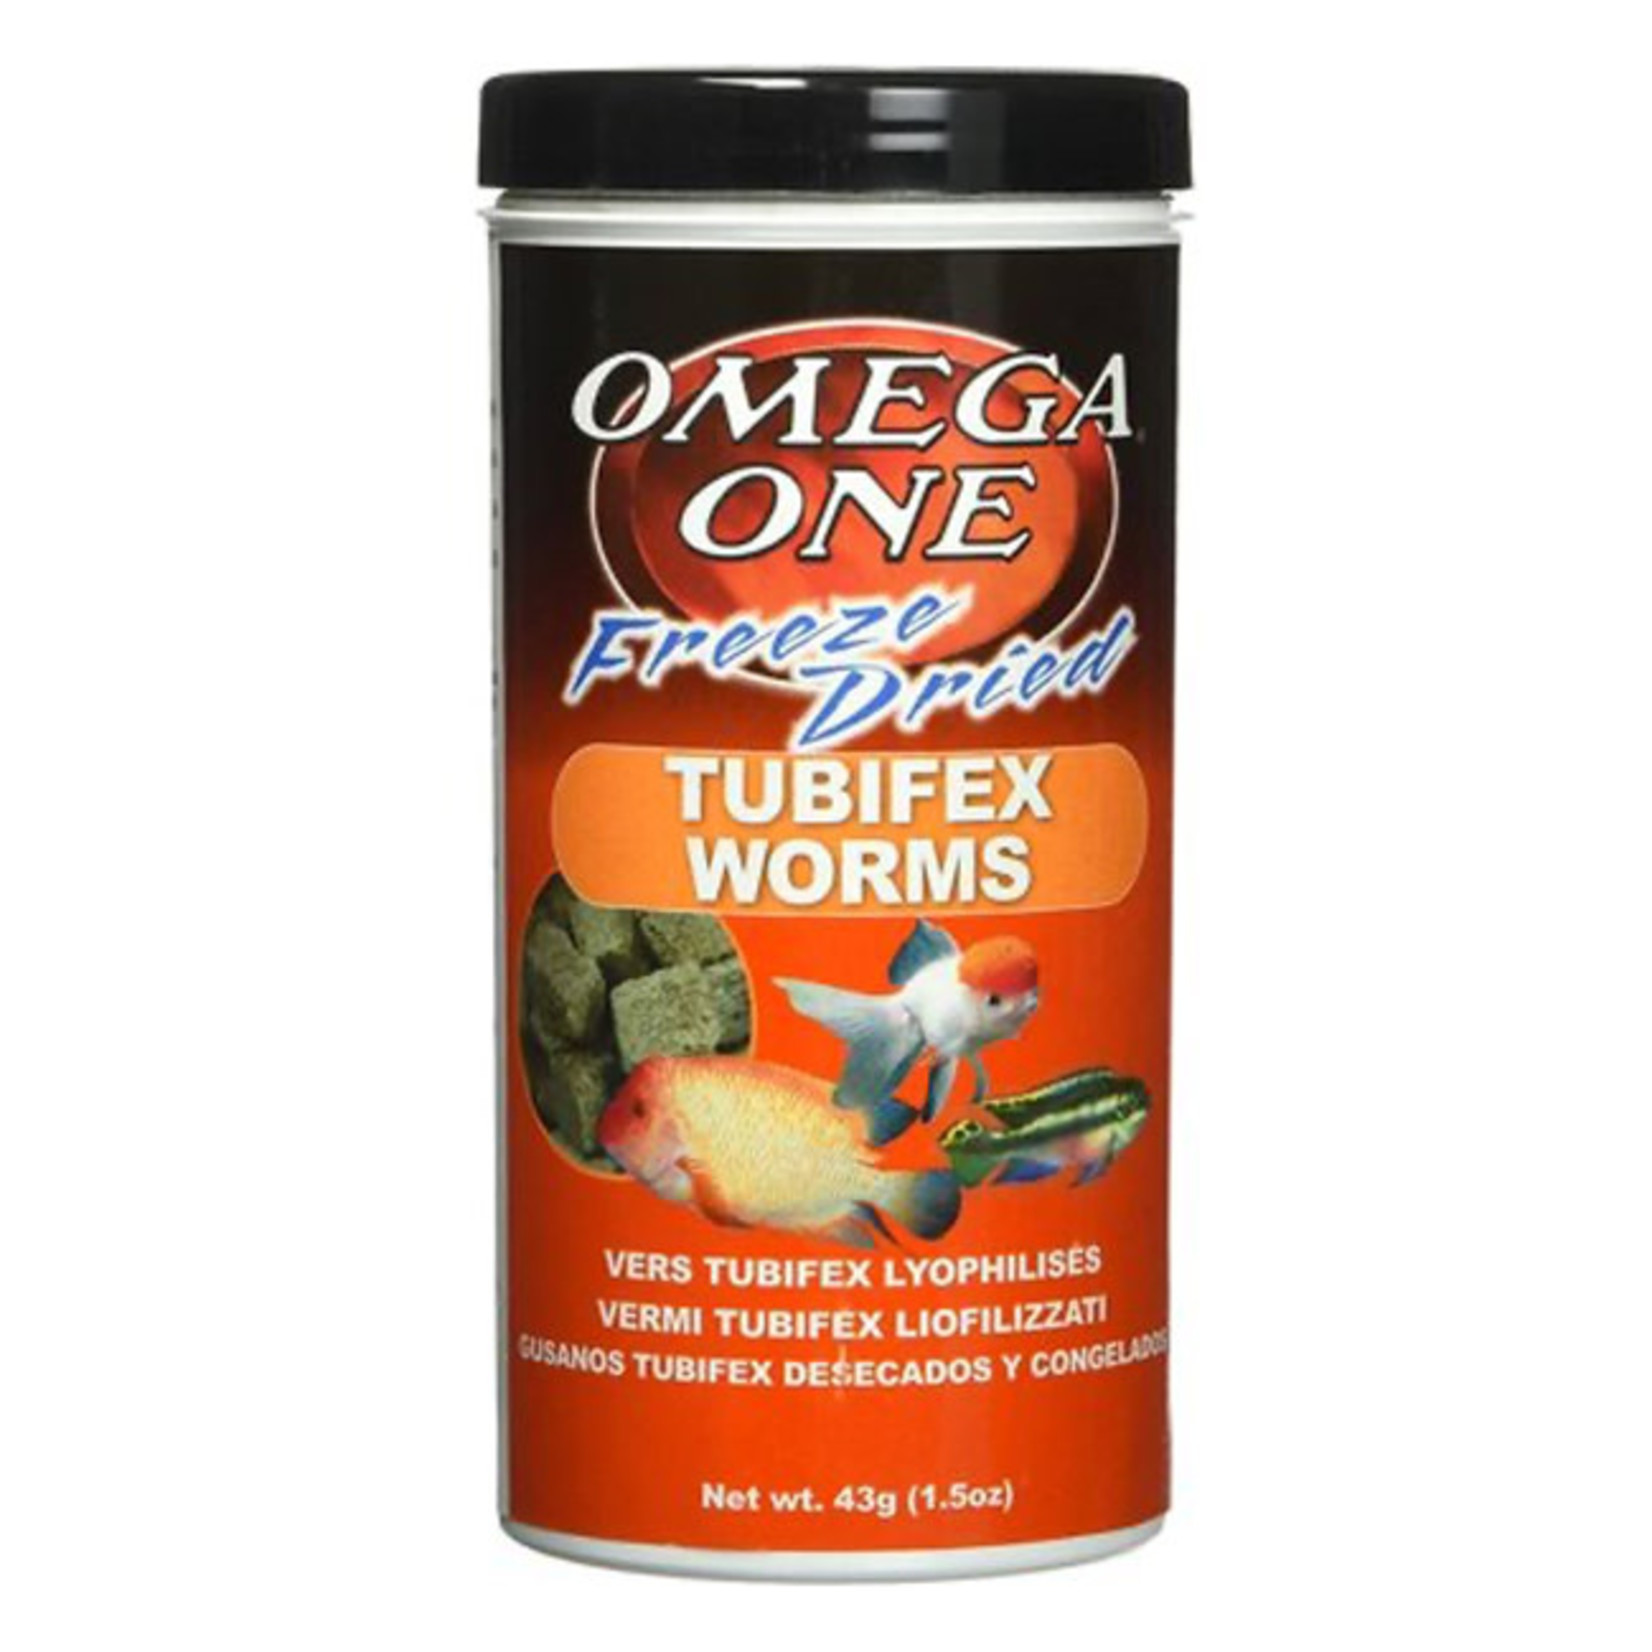 Omega One Omega One Freeze Dried Tubifex Worms Nutri-Treat